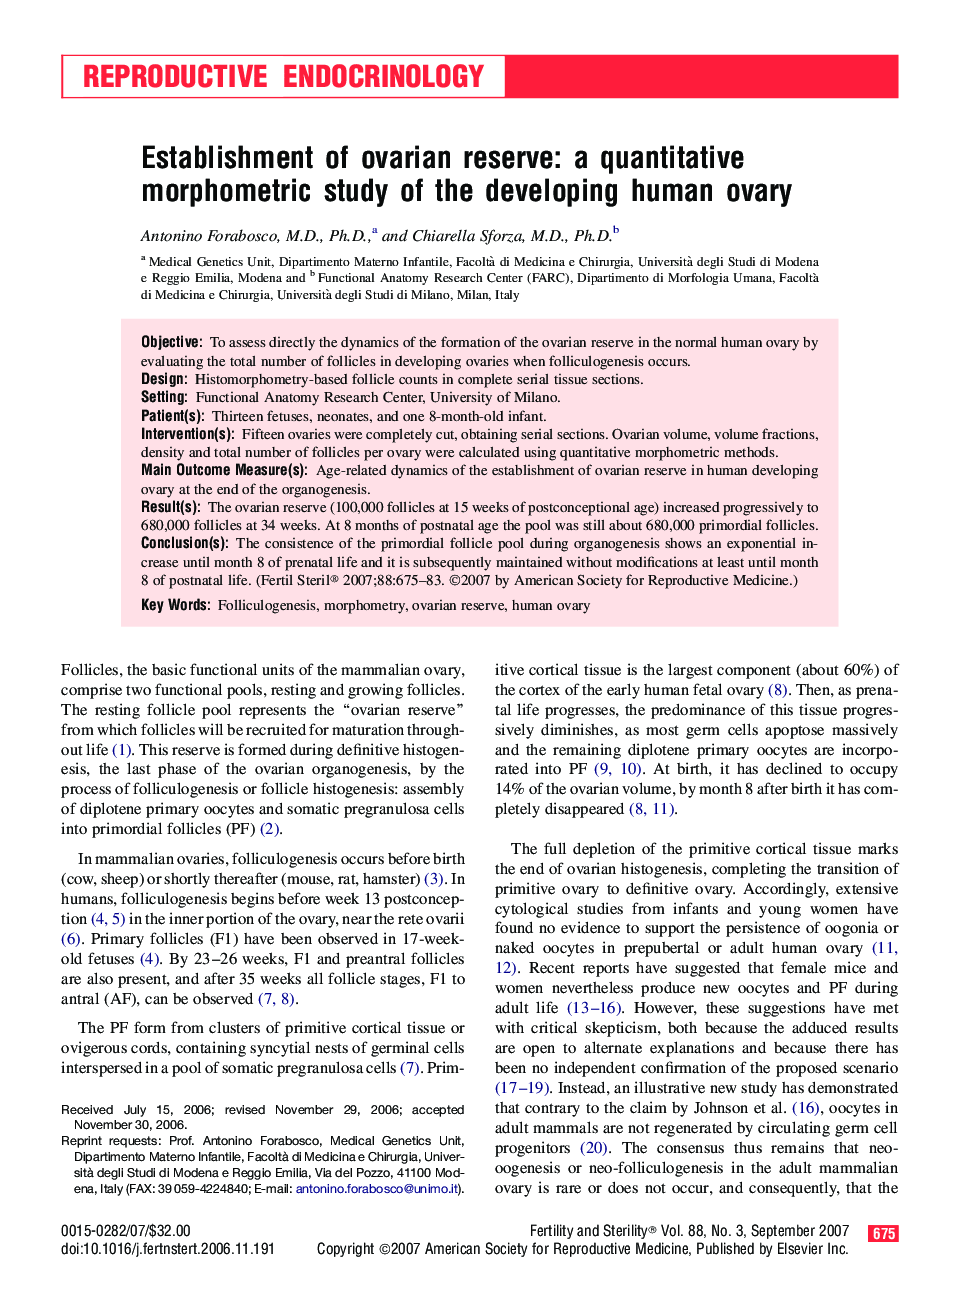 Establishment of ovarian reserve: a quantitative morphometric study of the developing human ovary